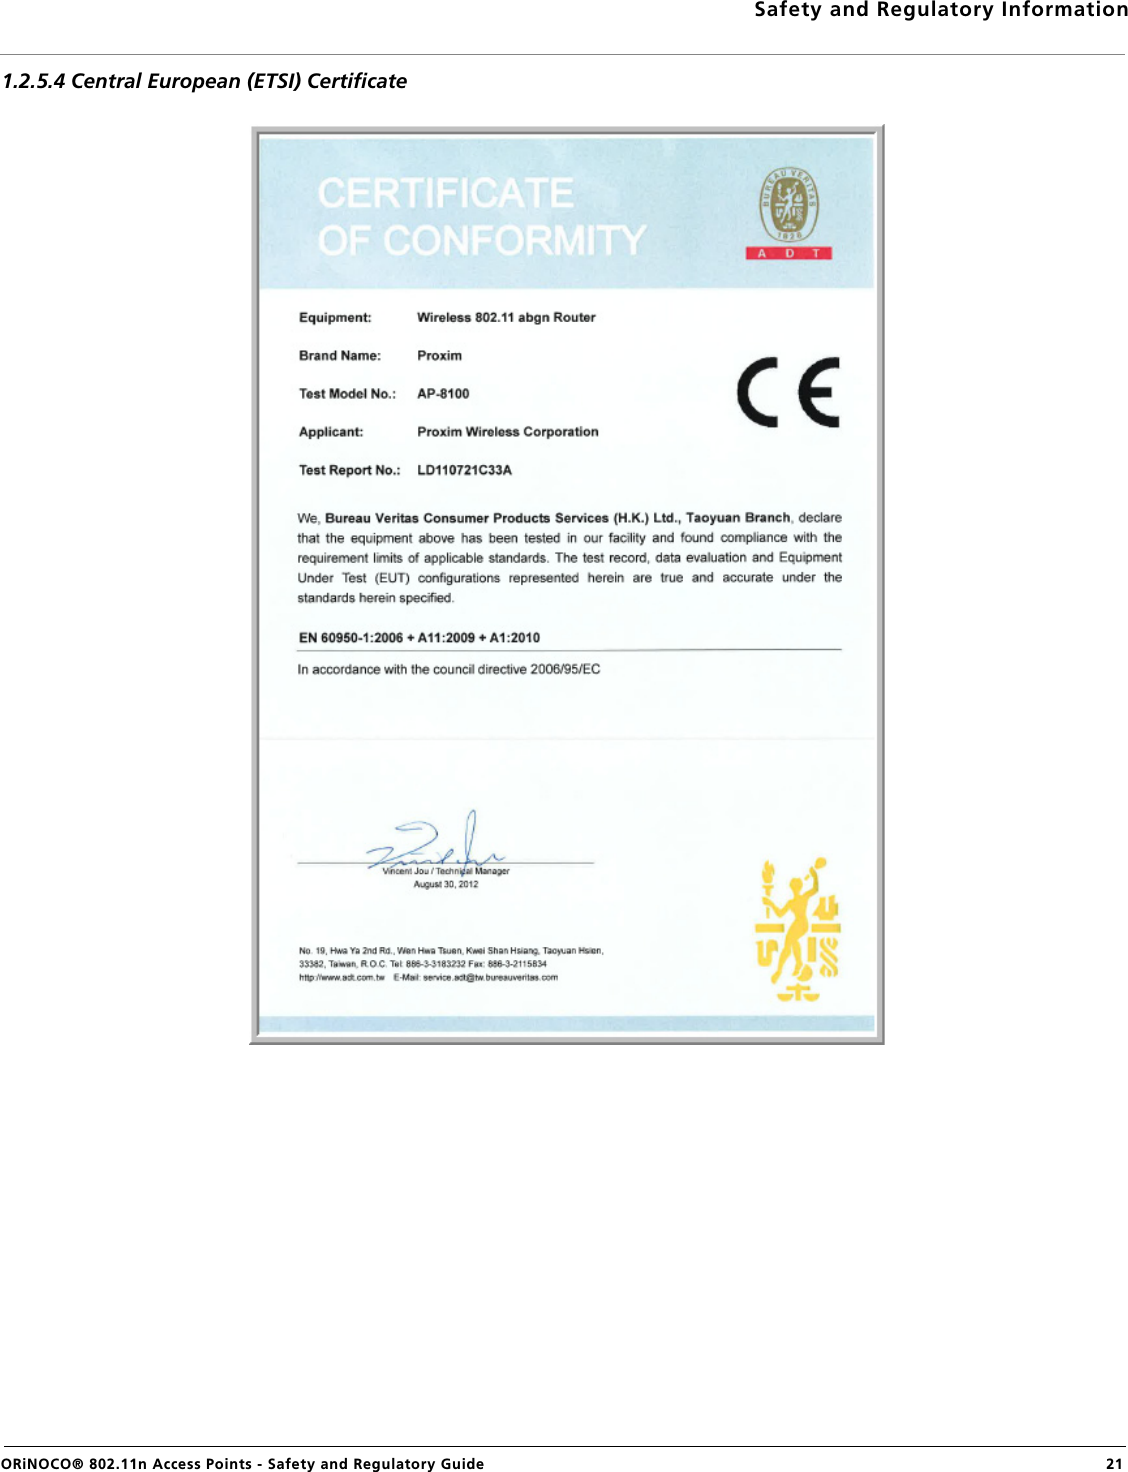 Safety and Regulatory InformationORiNOCO® 802.11n Access Points - Safety and Regulatory Guide  211.2.5.4 Central European (ETSI) Certificate